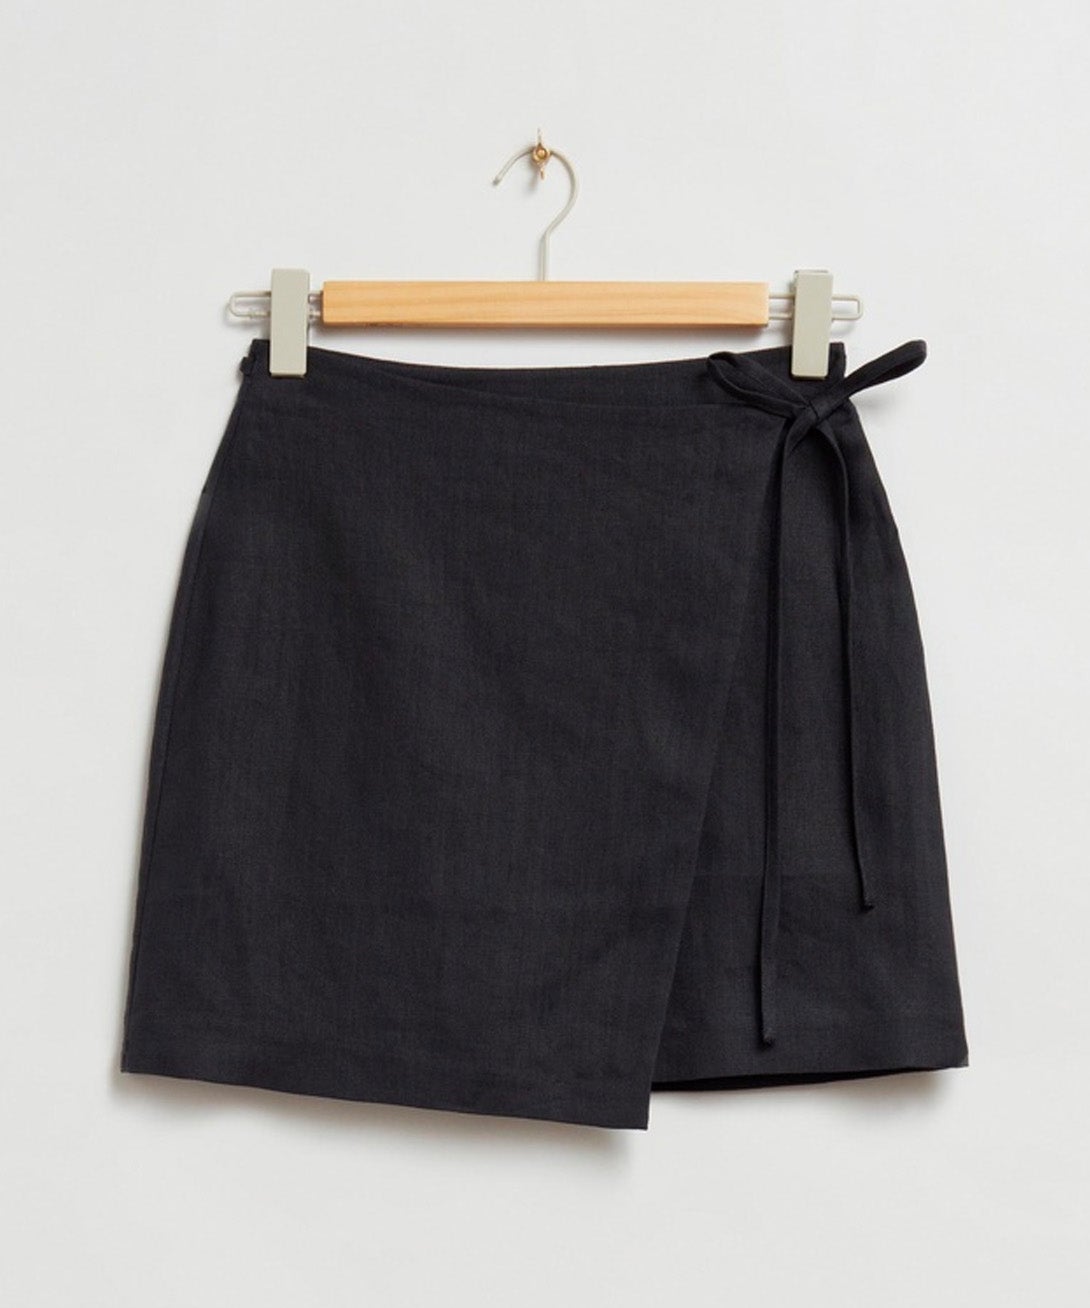 & Other Stories + St Beatrice Linen Skirt